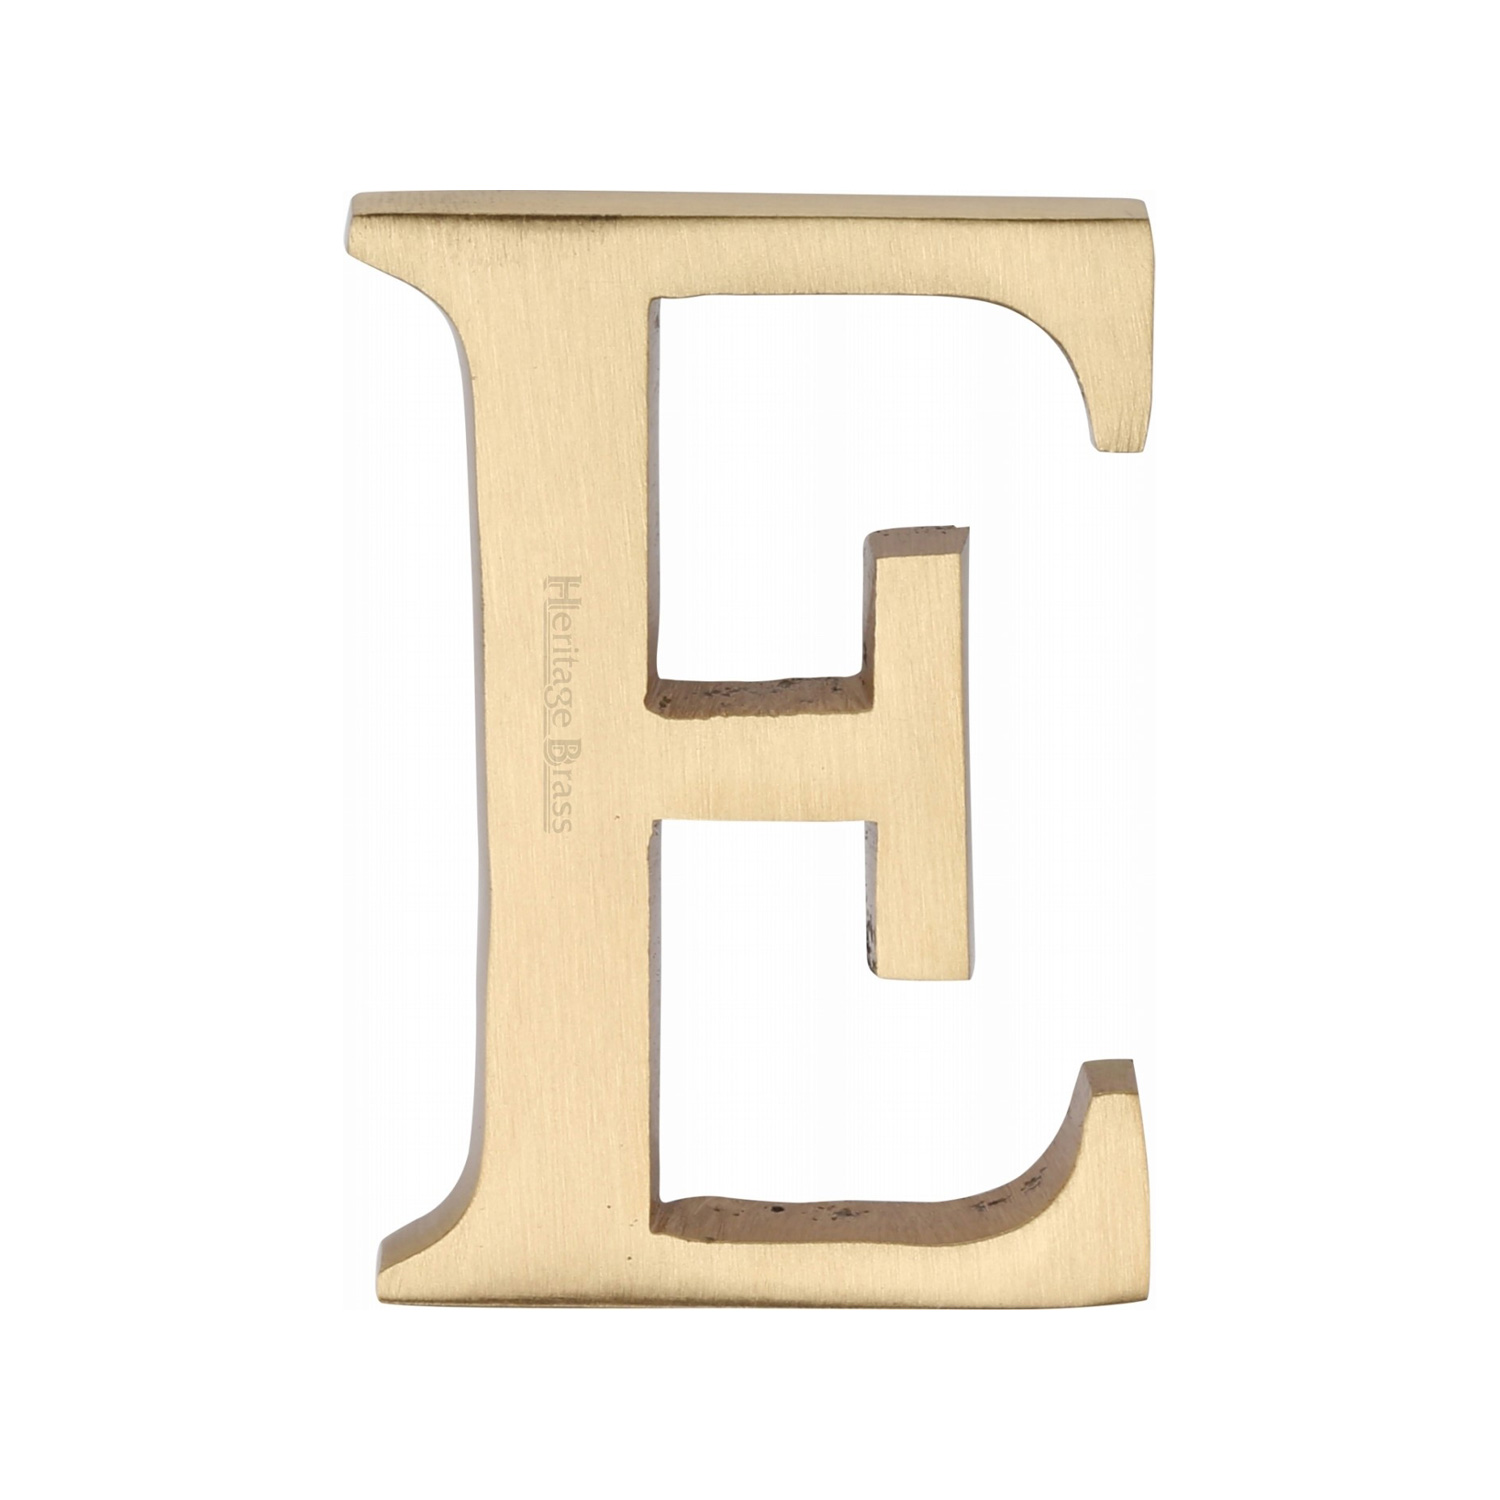 Heritage Brass Alphabet E Pin Fix 51mm (2")